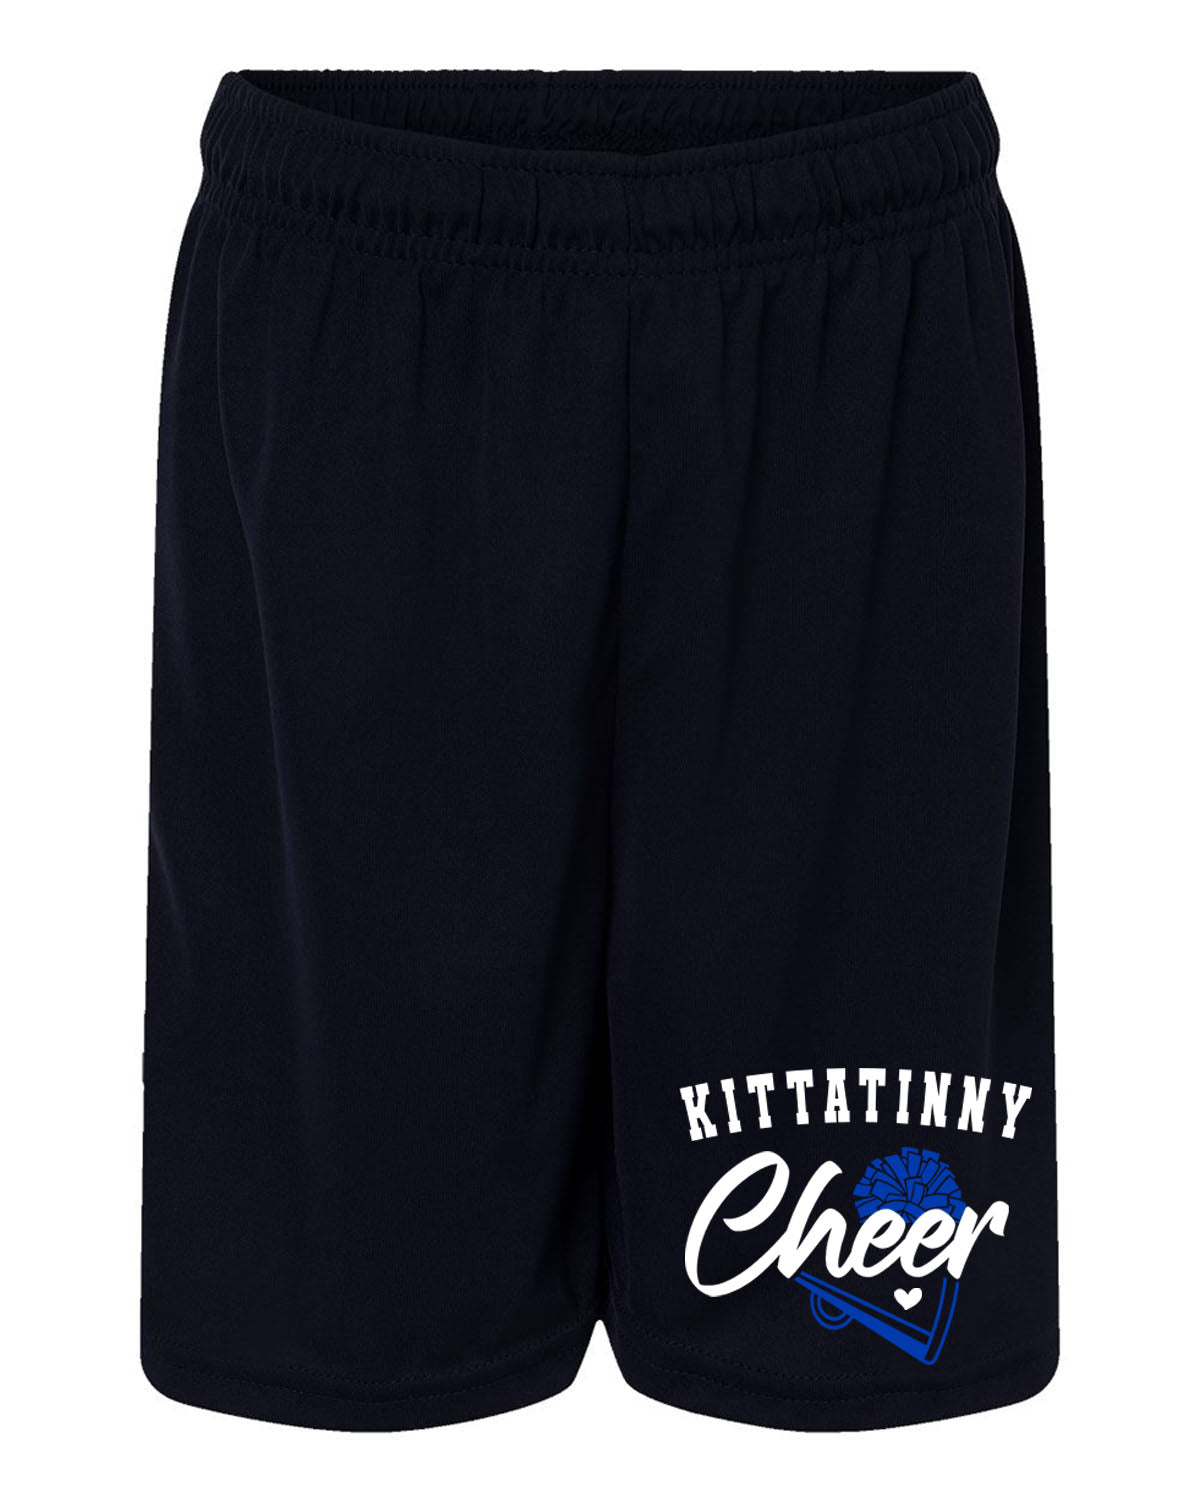 Kittatinny Cheer Performance Shorts Design 9